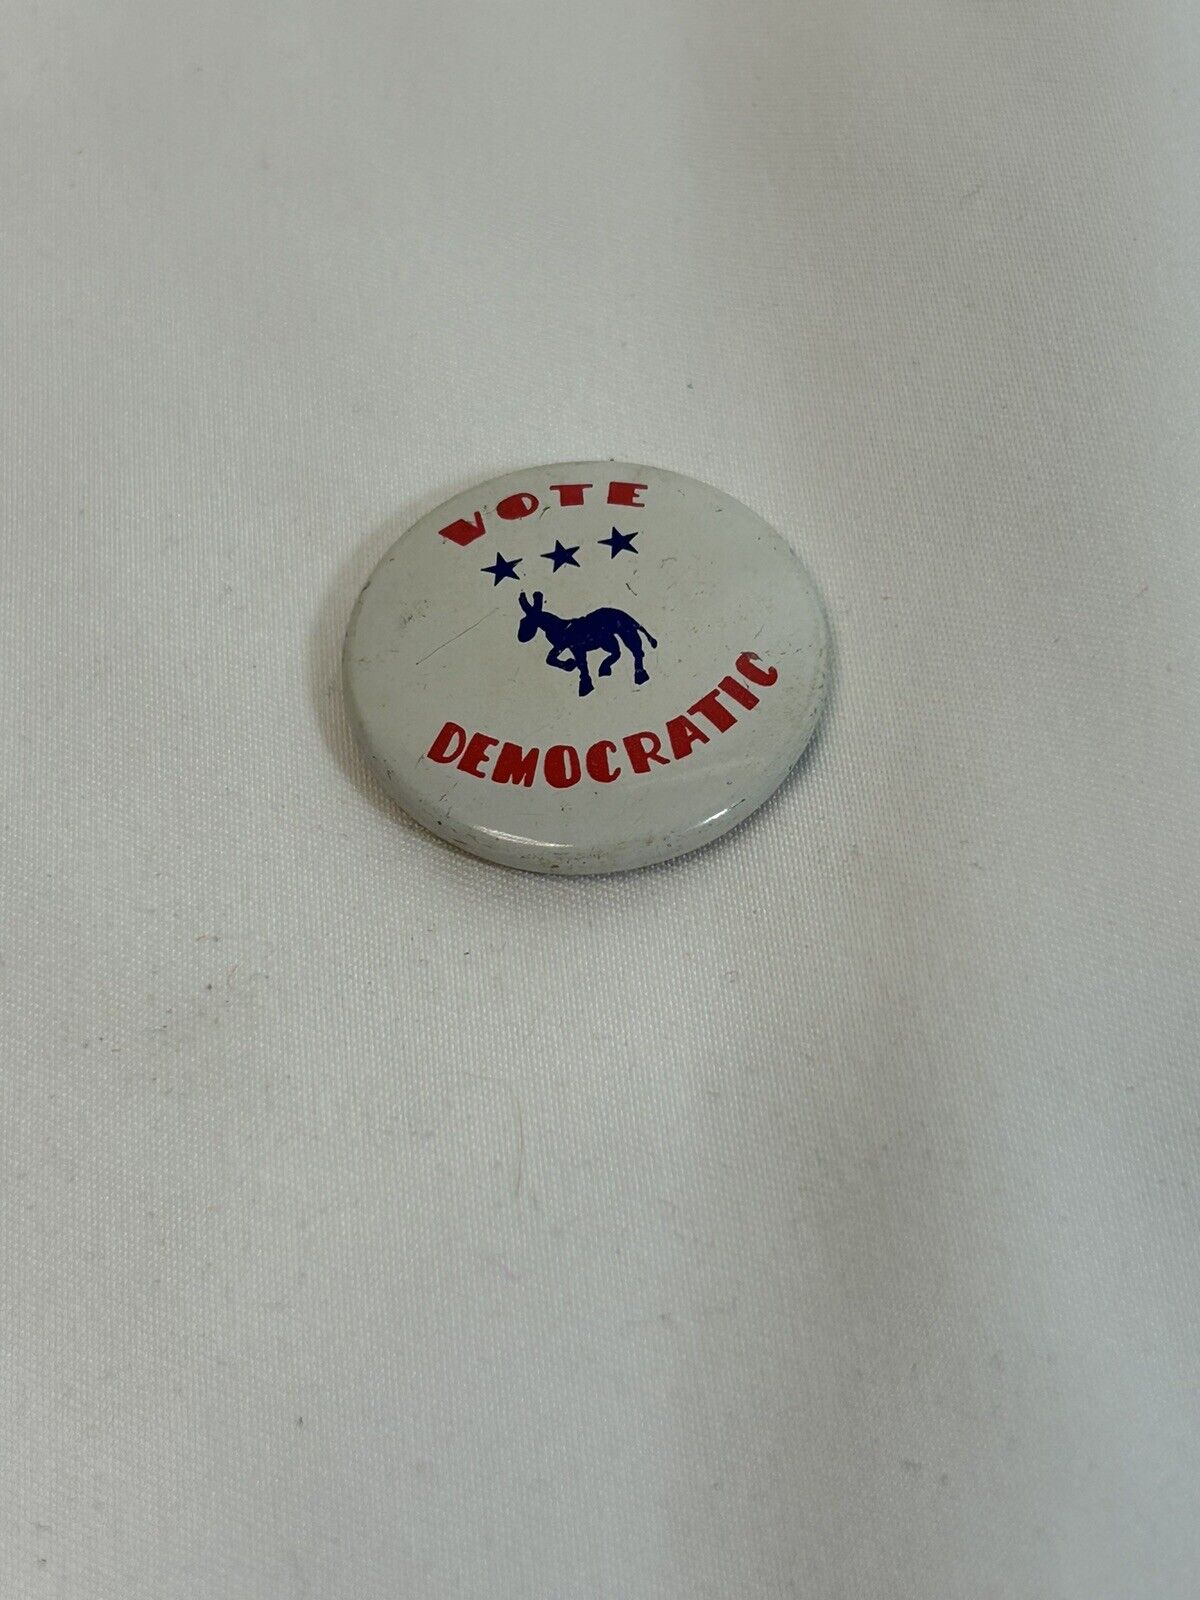 Vote Democratic Donkey Symbol Vintage Button 